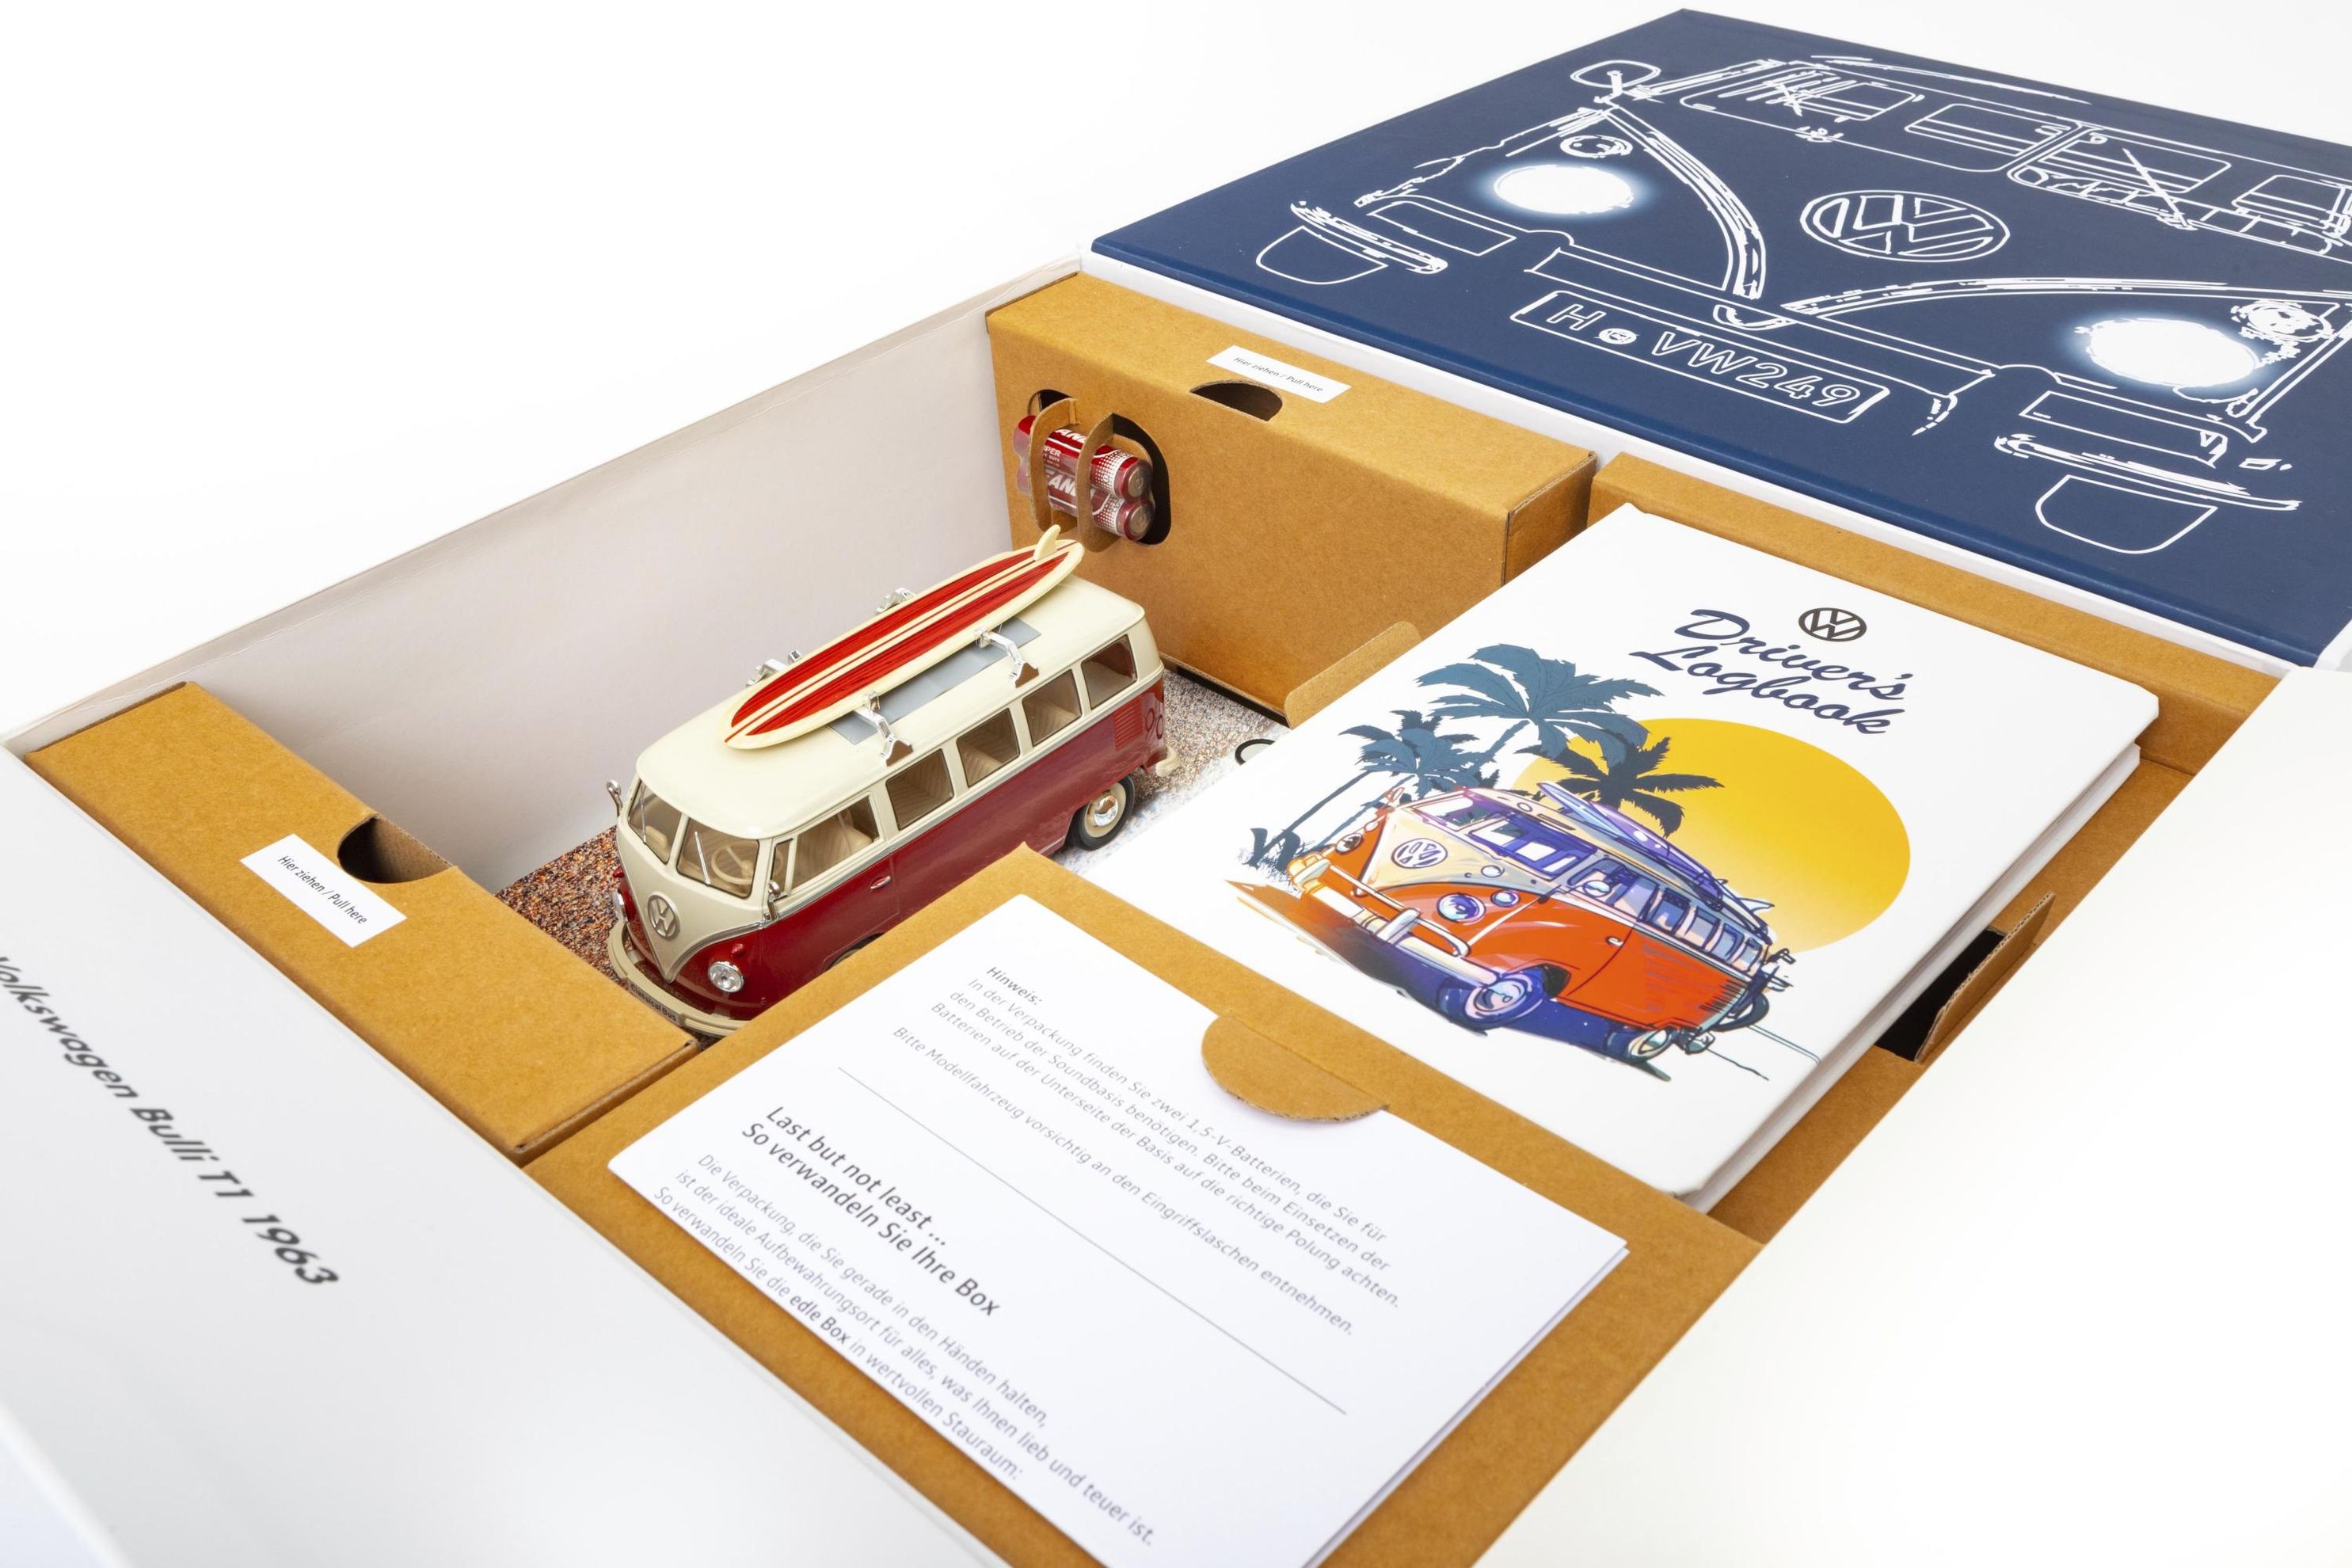 Geschenkbox Collector´s Edition VW Bulli bestellen